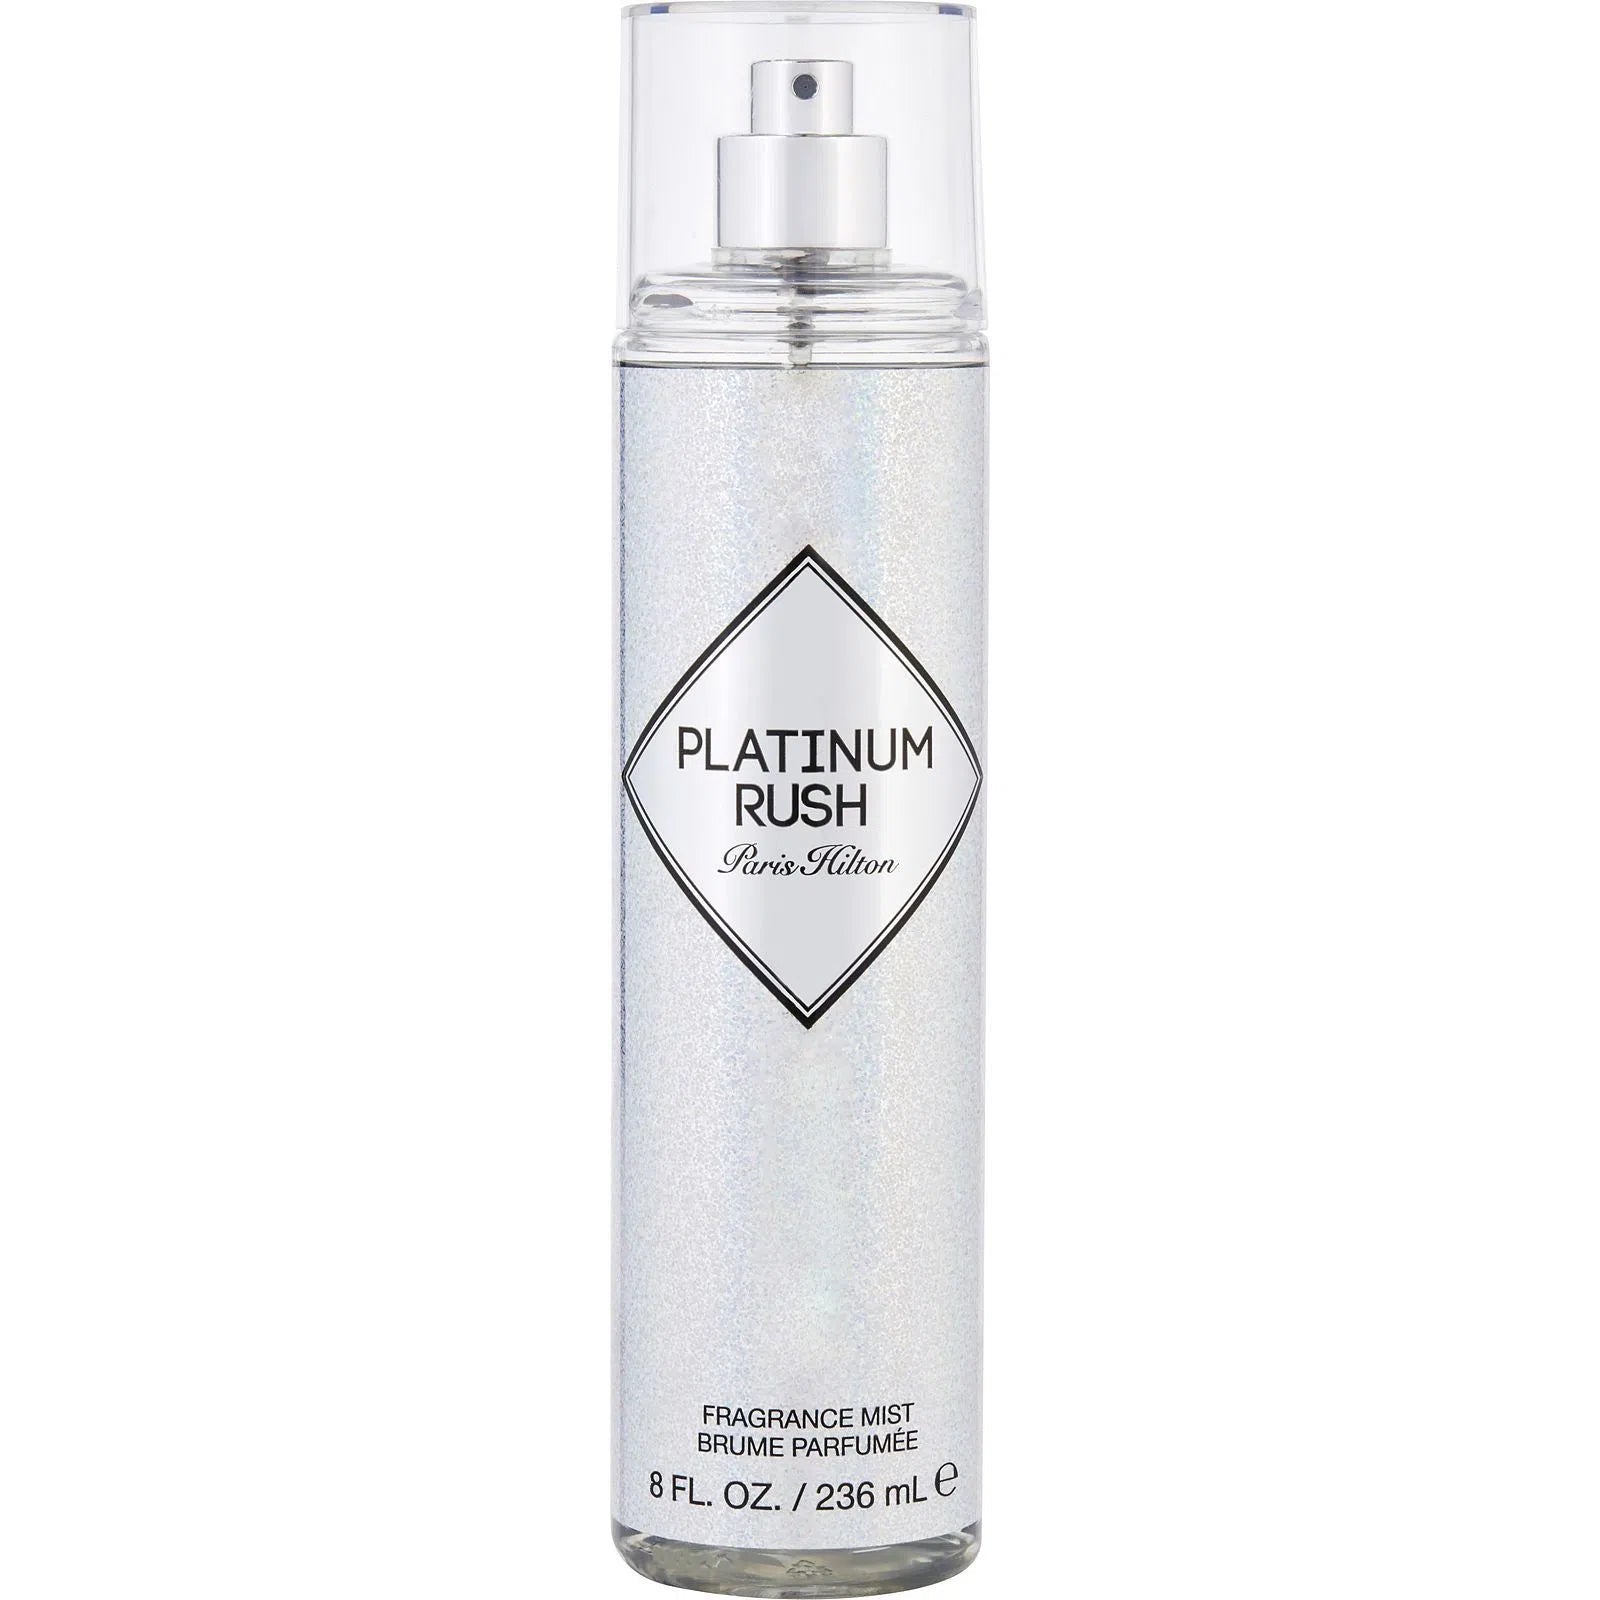 Body Mist Paris Hilton Platinum Rush Body Mist (W) / 236 ml - 608940579572- Prive Perfumes Honduras